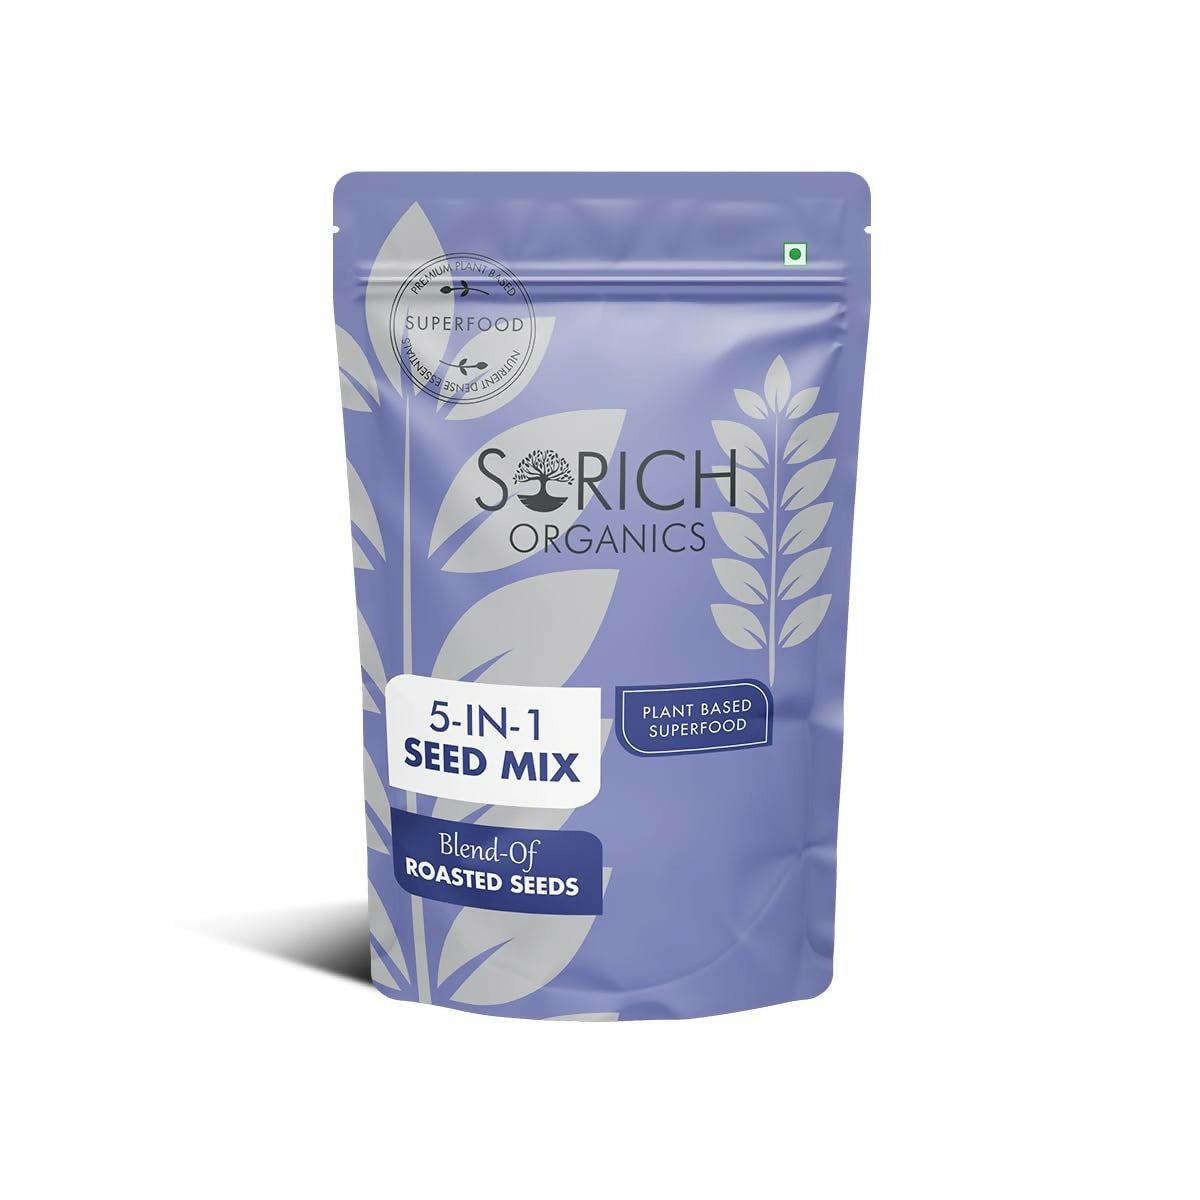 Sorich Organics 5 in 1 Seed Mix - BUDNE